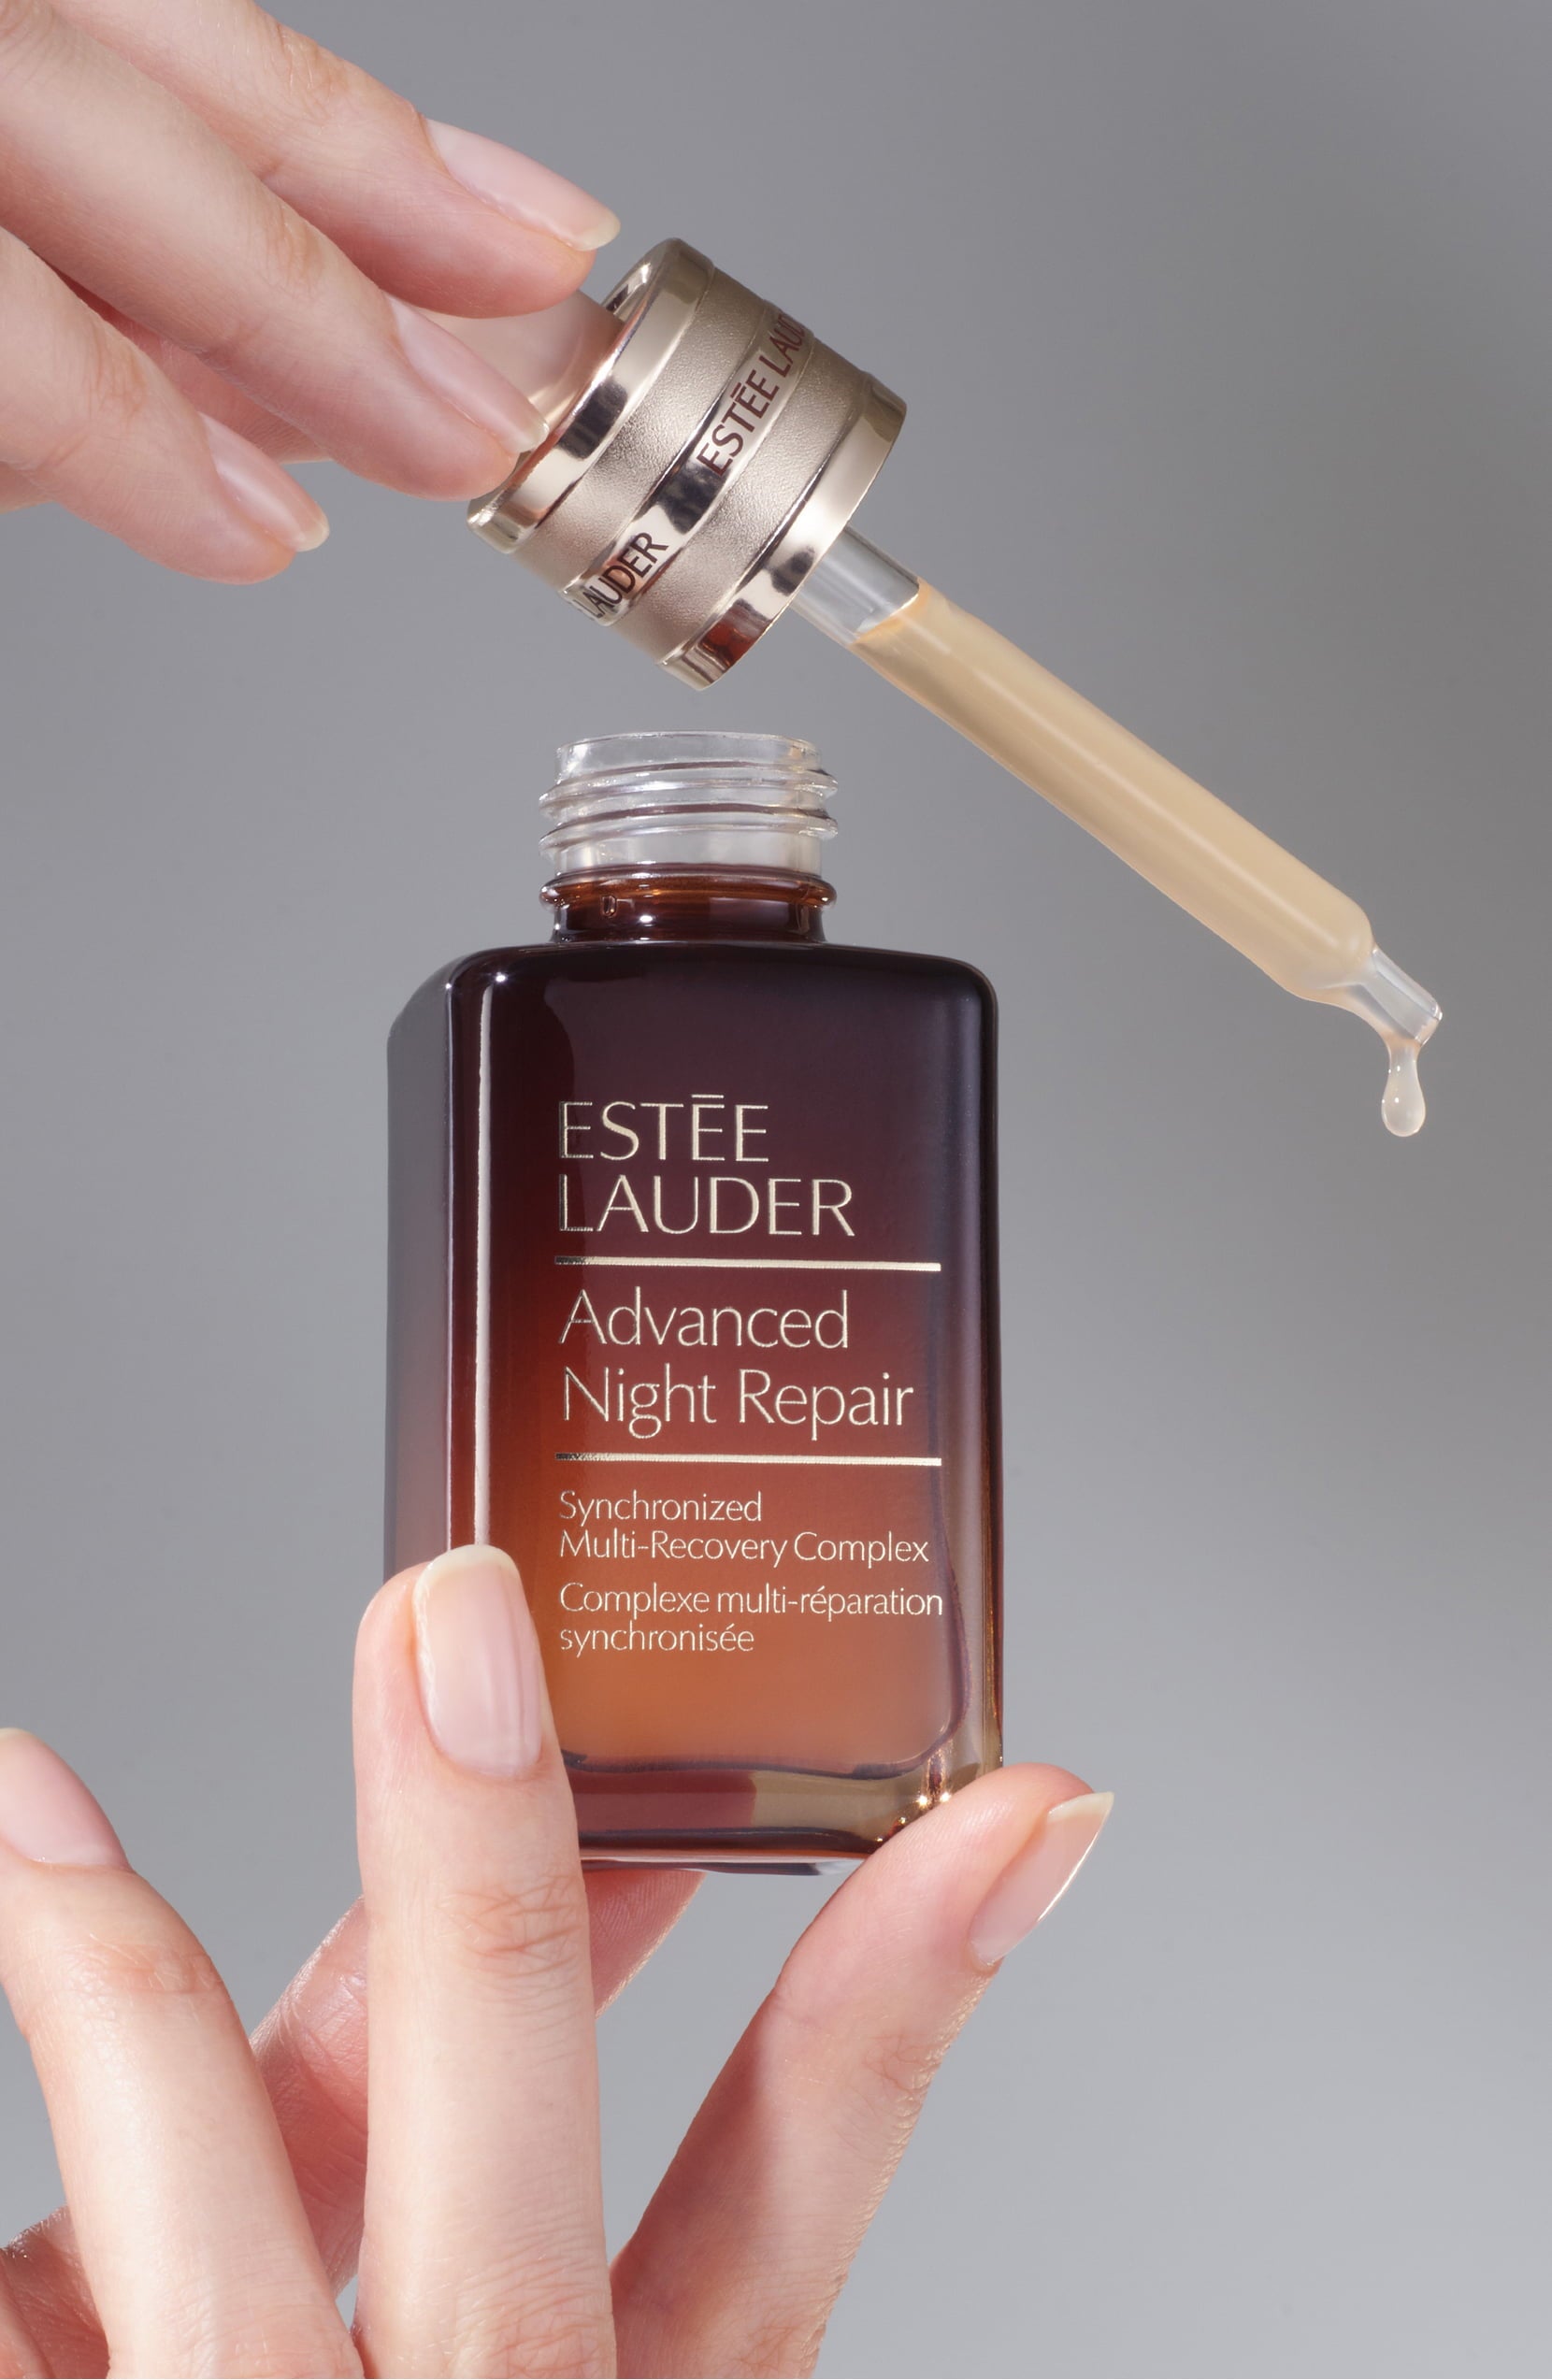 Estee Lauder Advanced Night Repair Synchronized Multi-Recovery Complex, 1.7 oz